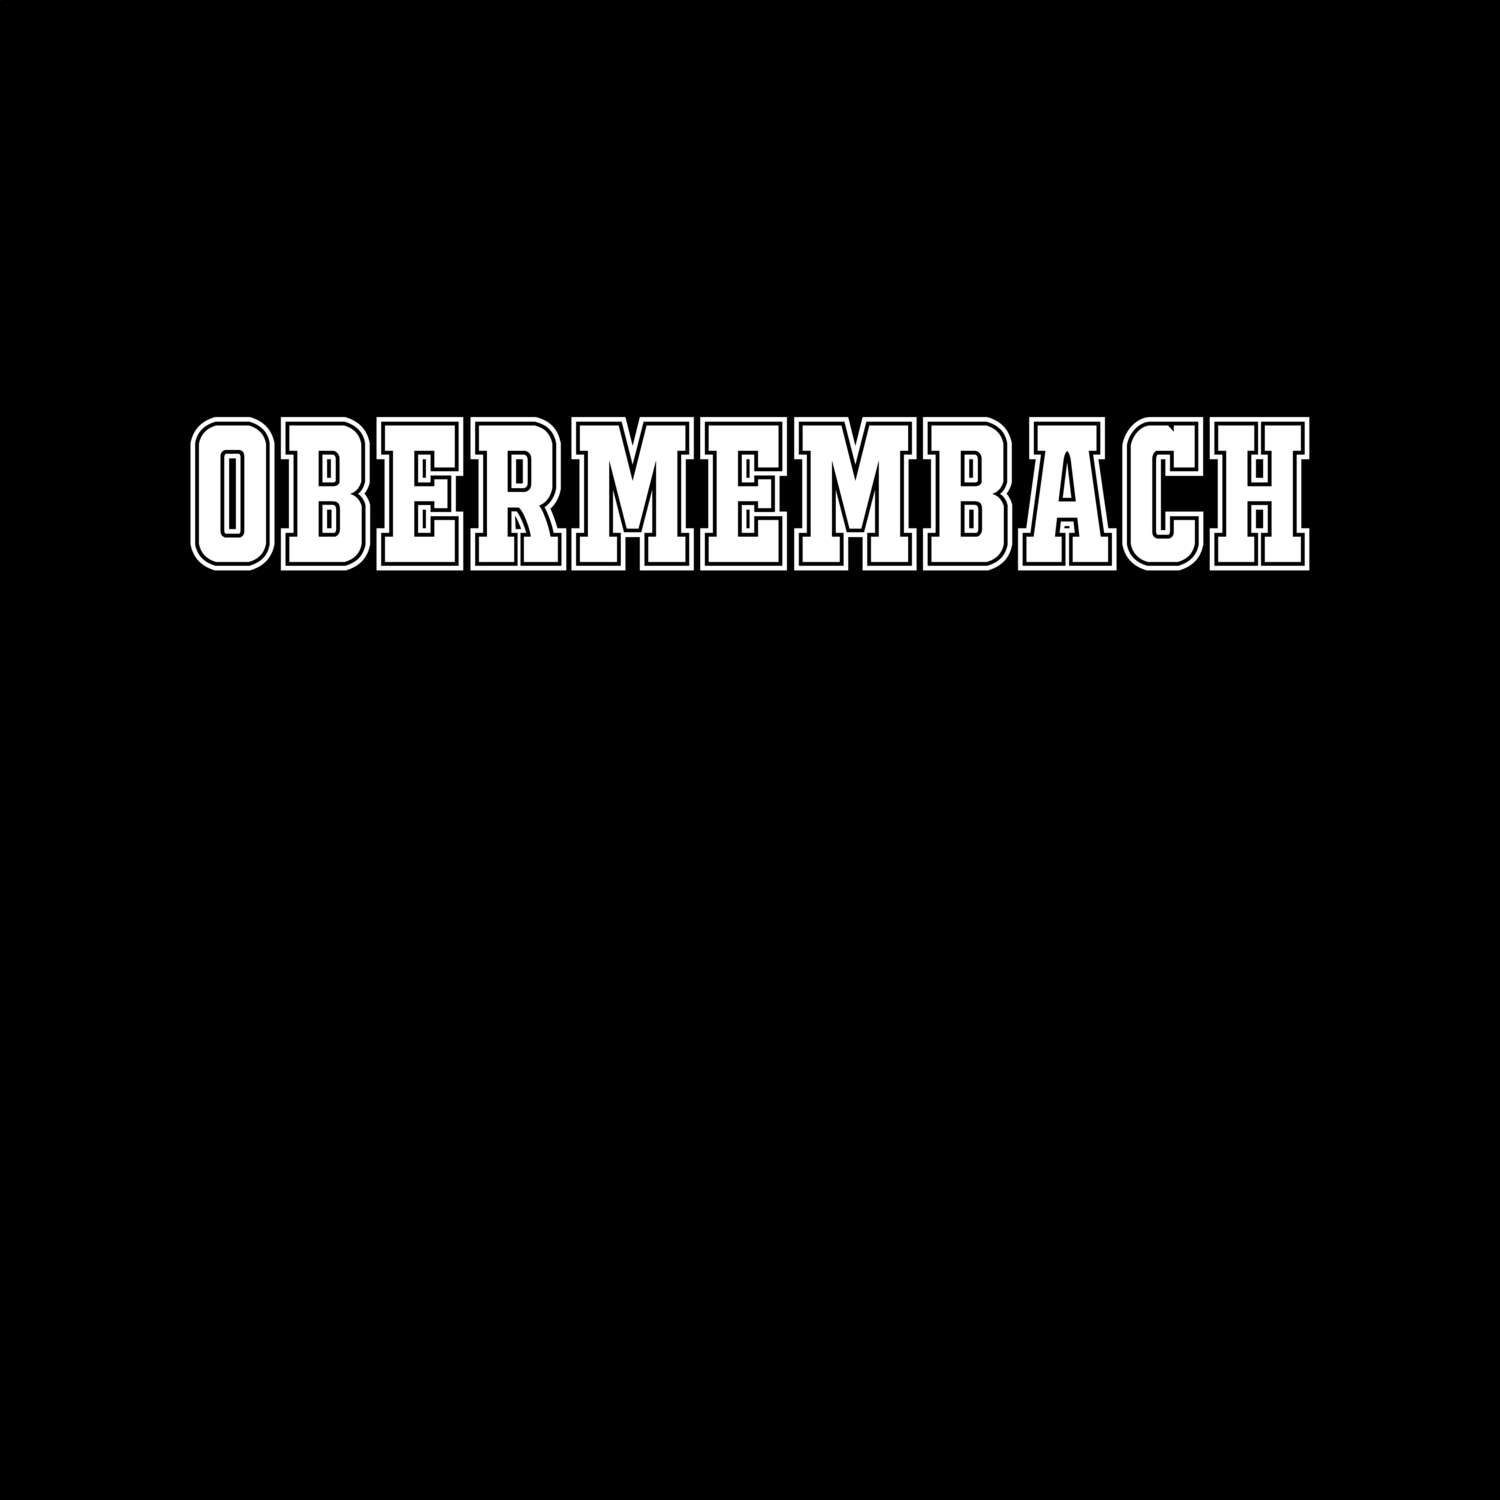 Obermembach T-Shirt »Classic«